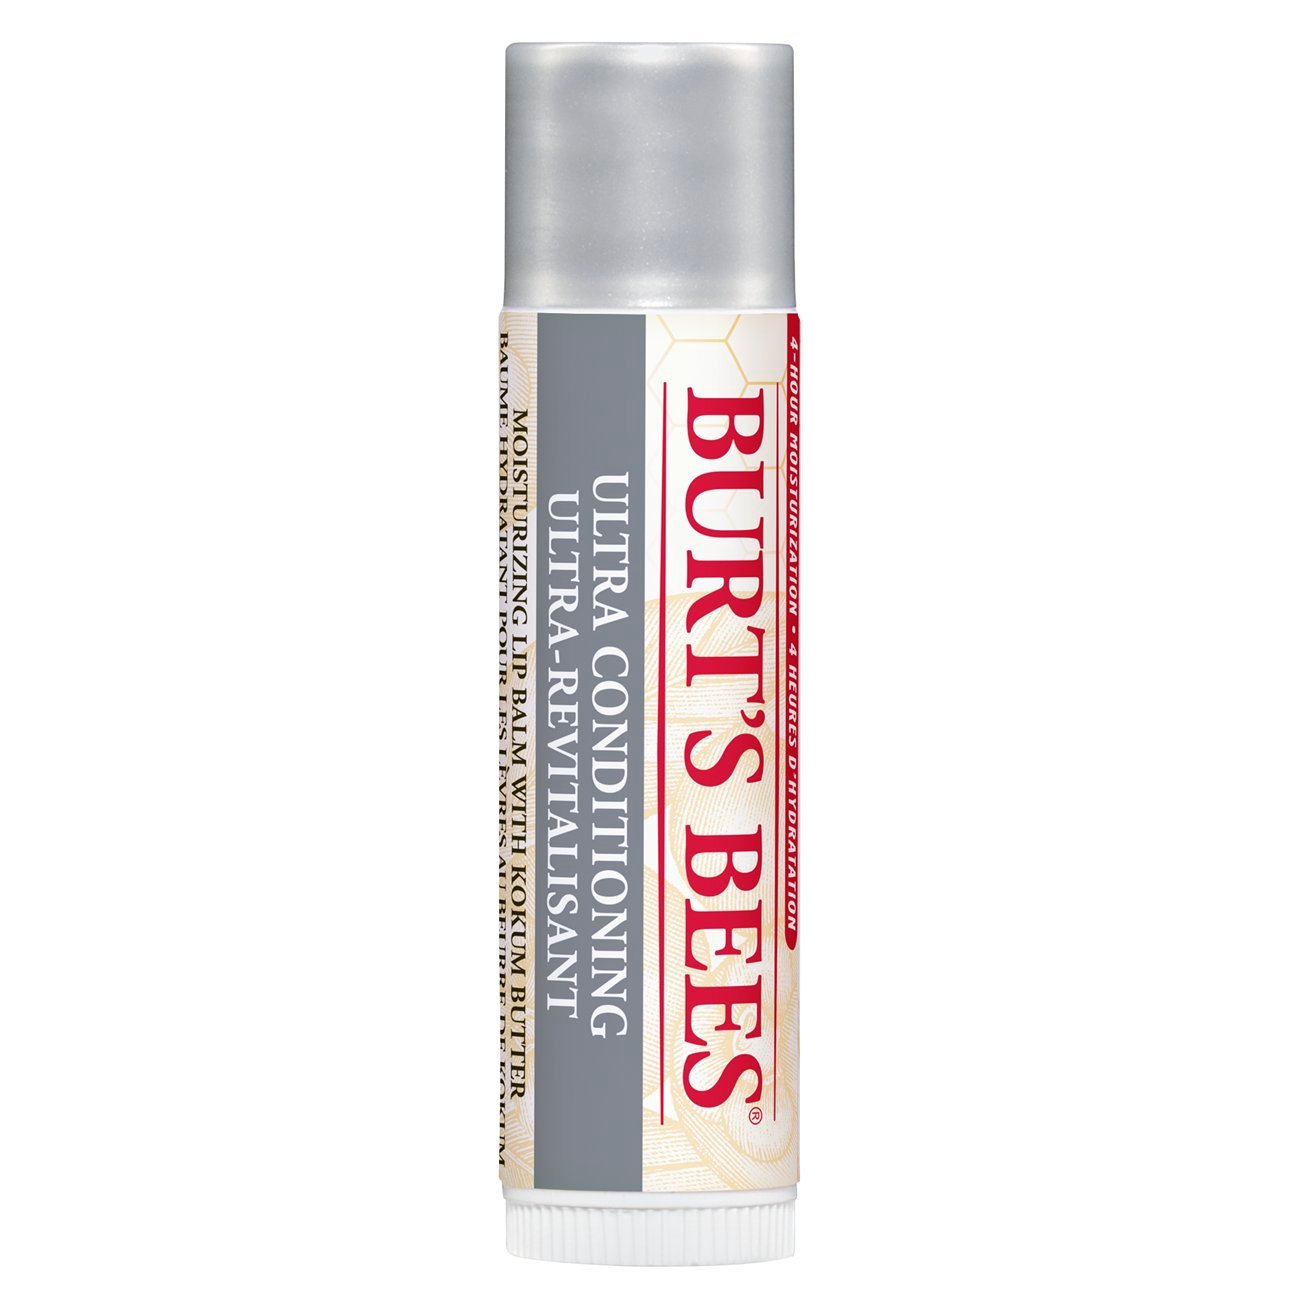 Burt's Bees Lip Balm Ultra Conditioning 4g